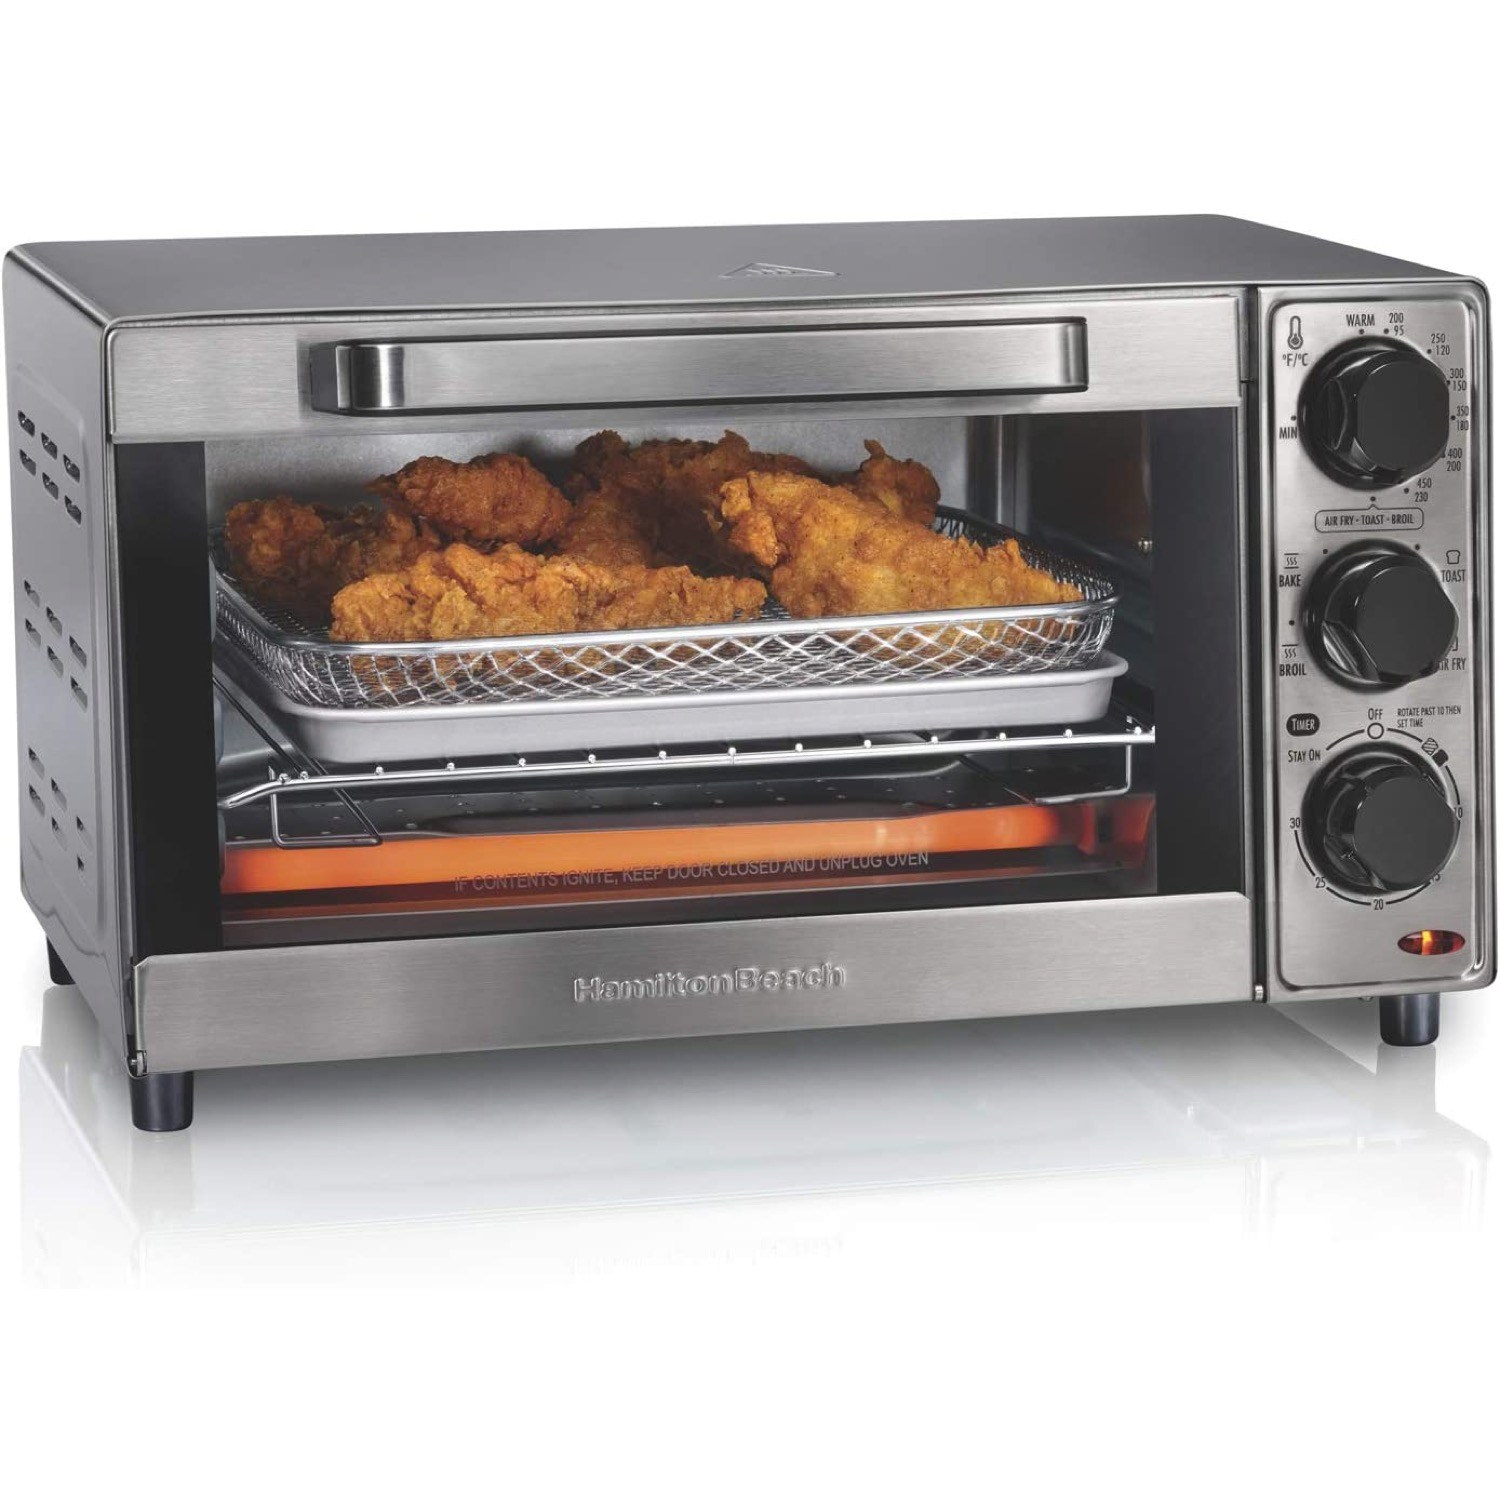 https://cdn.bestreviews.com/images/v4desktop/product-matrix/best-hamilton-beach-toaster-ovens-sure-crisp-air-fryer-countertop-toaster-oven.jpg